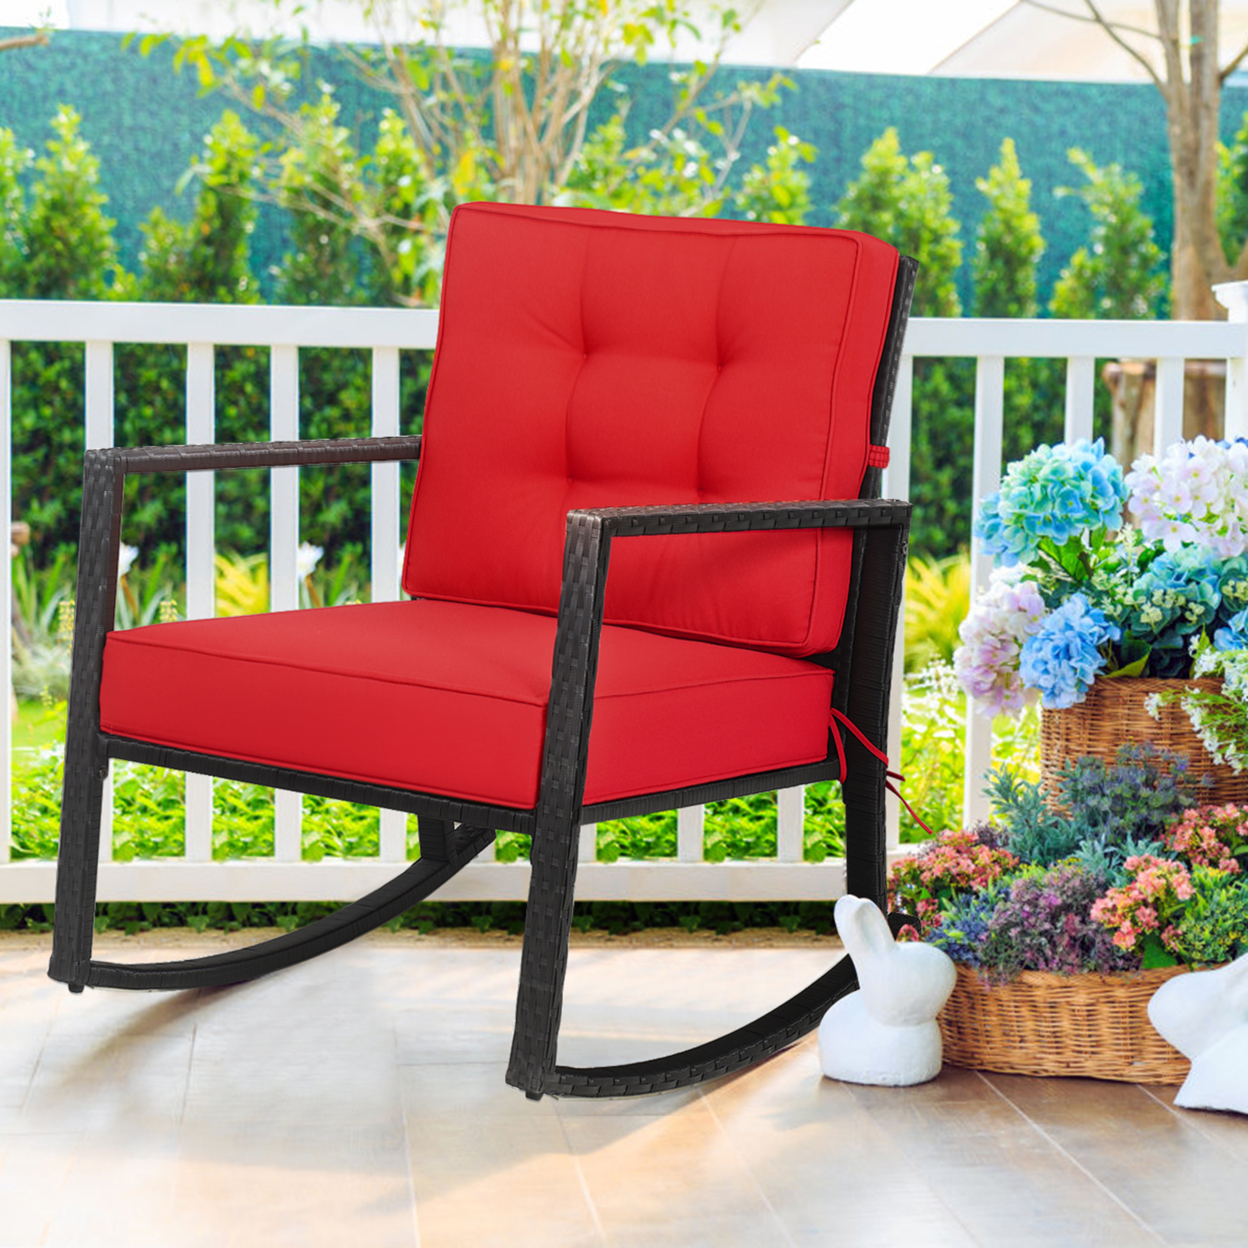 Outdoor Wicker Rocking Chair Patio Lawn Rattan Single Chair Glider W/ Red Cushion